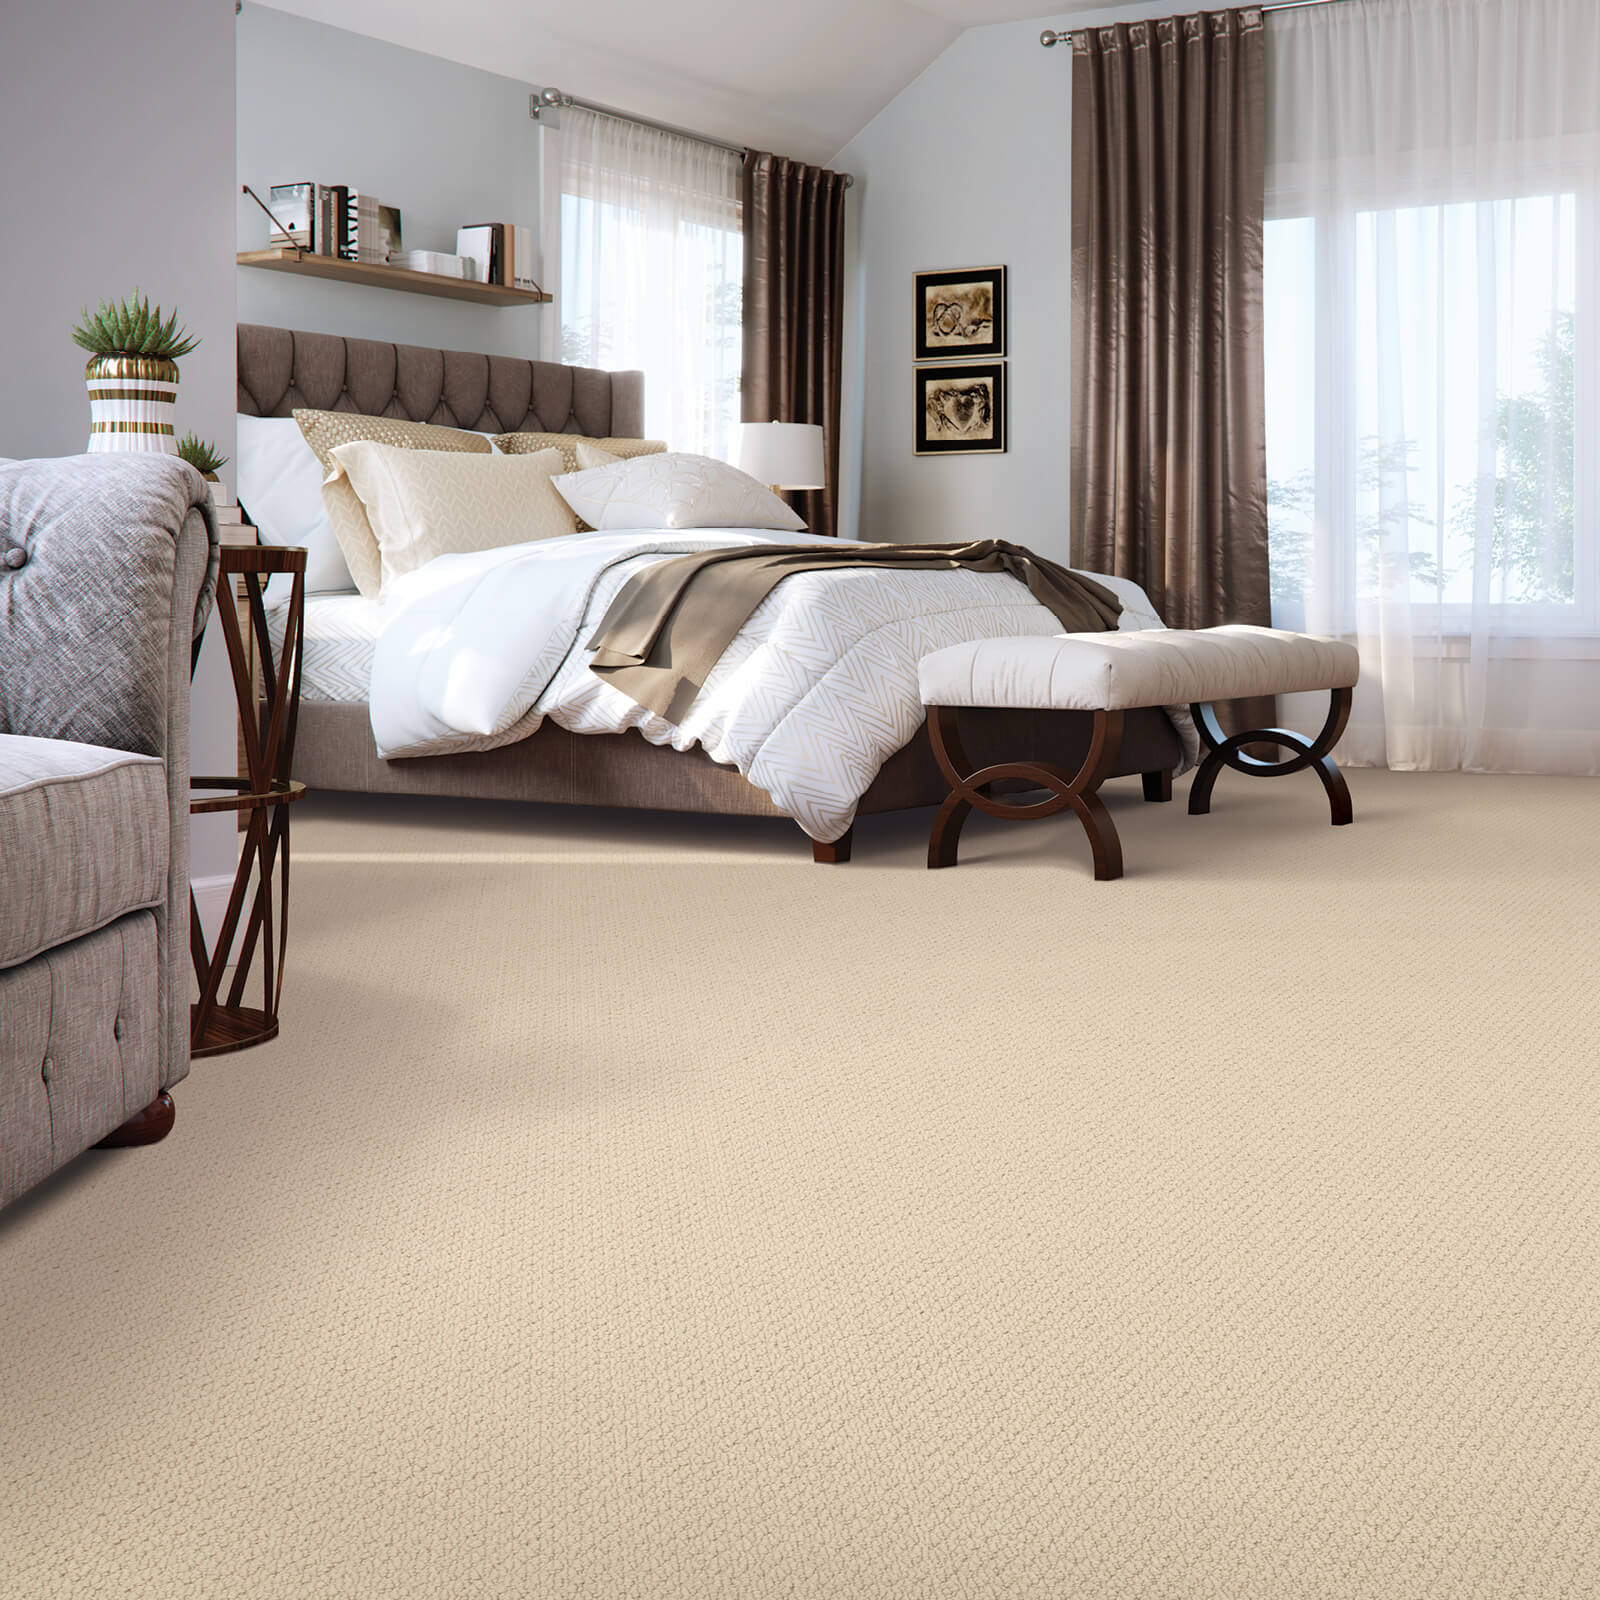 Bedroom carpet | Sarmazian Brothers Flooring